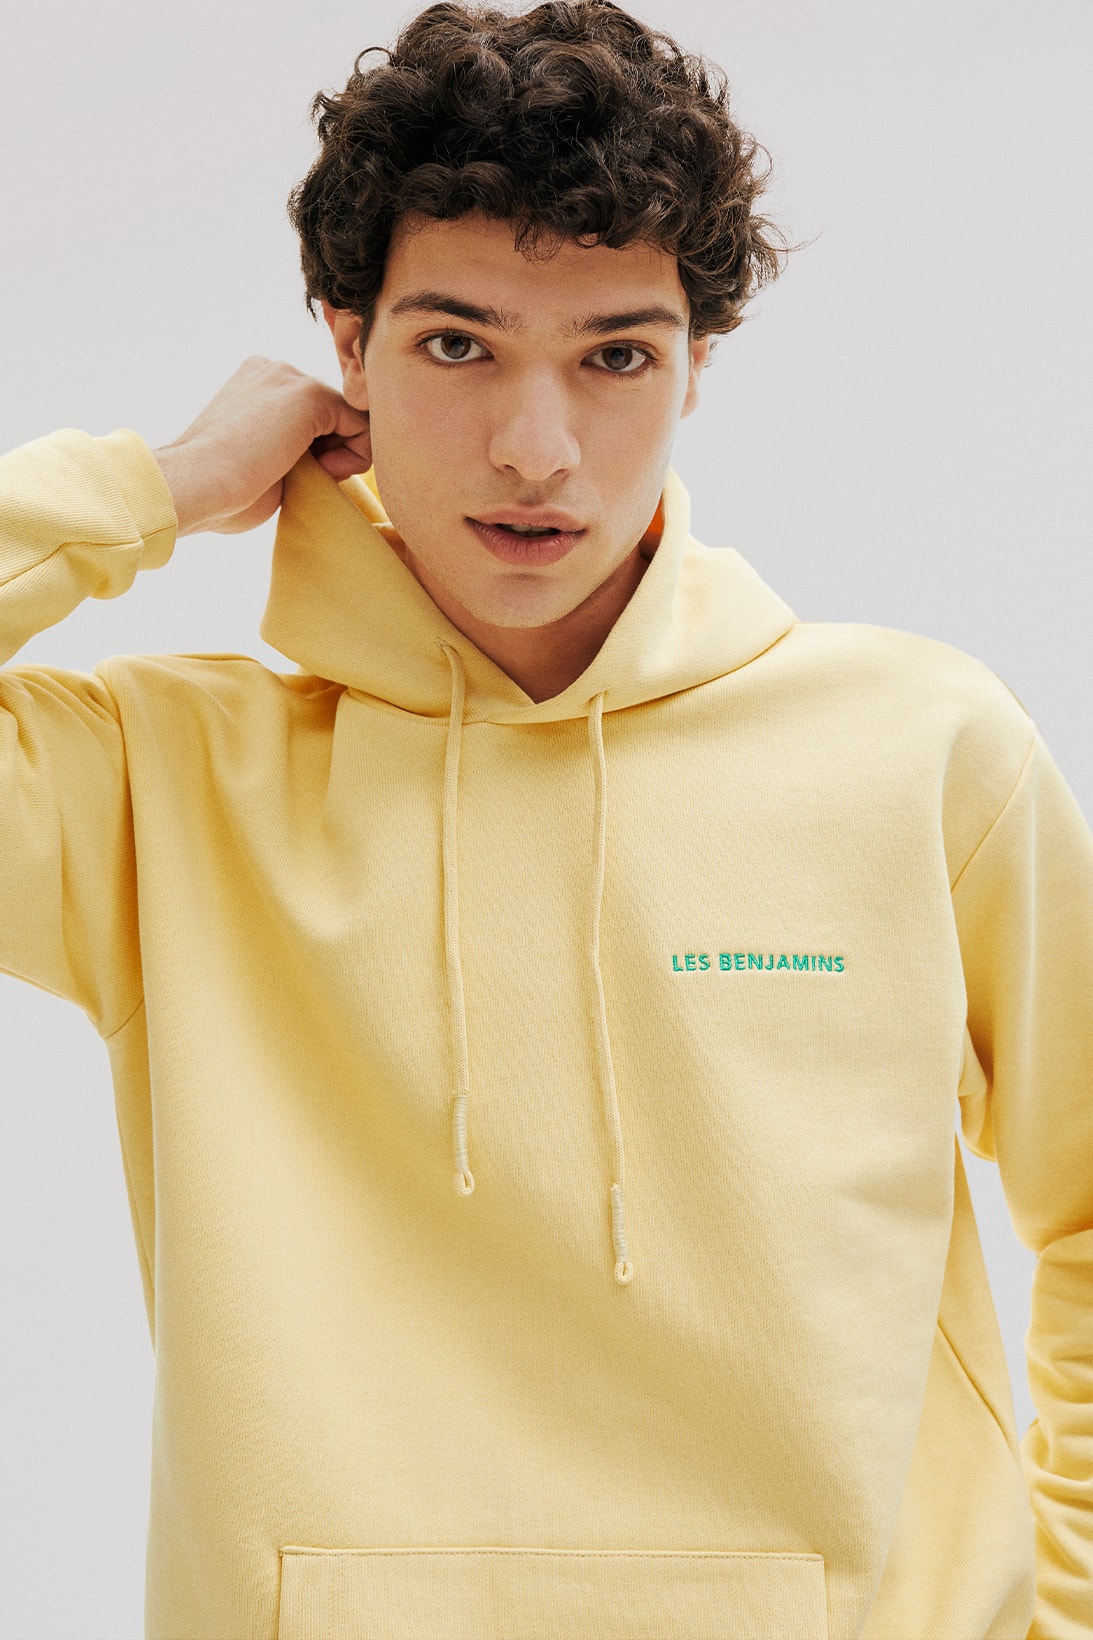 Les Benjamins "Essentials 4.0" Collection Streetwear Hoodies Front Yellow